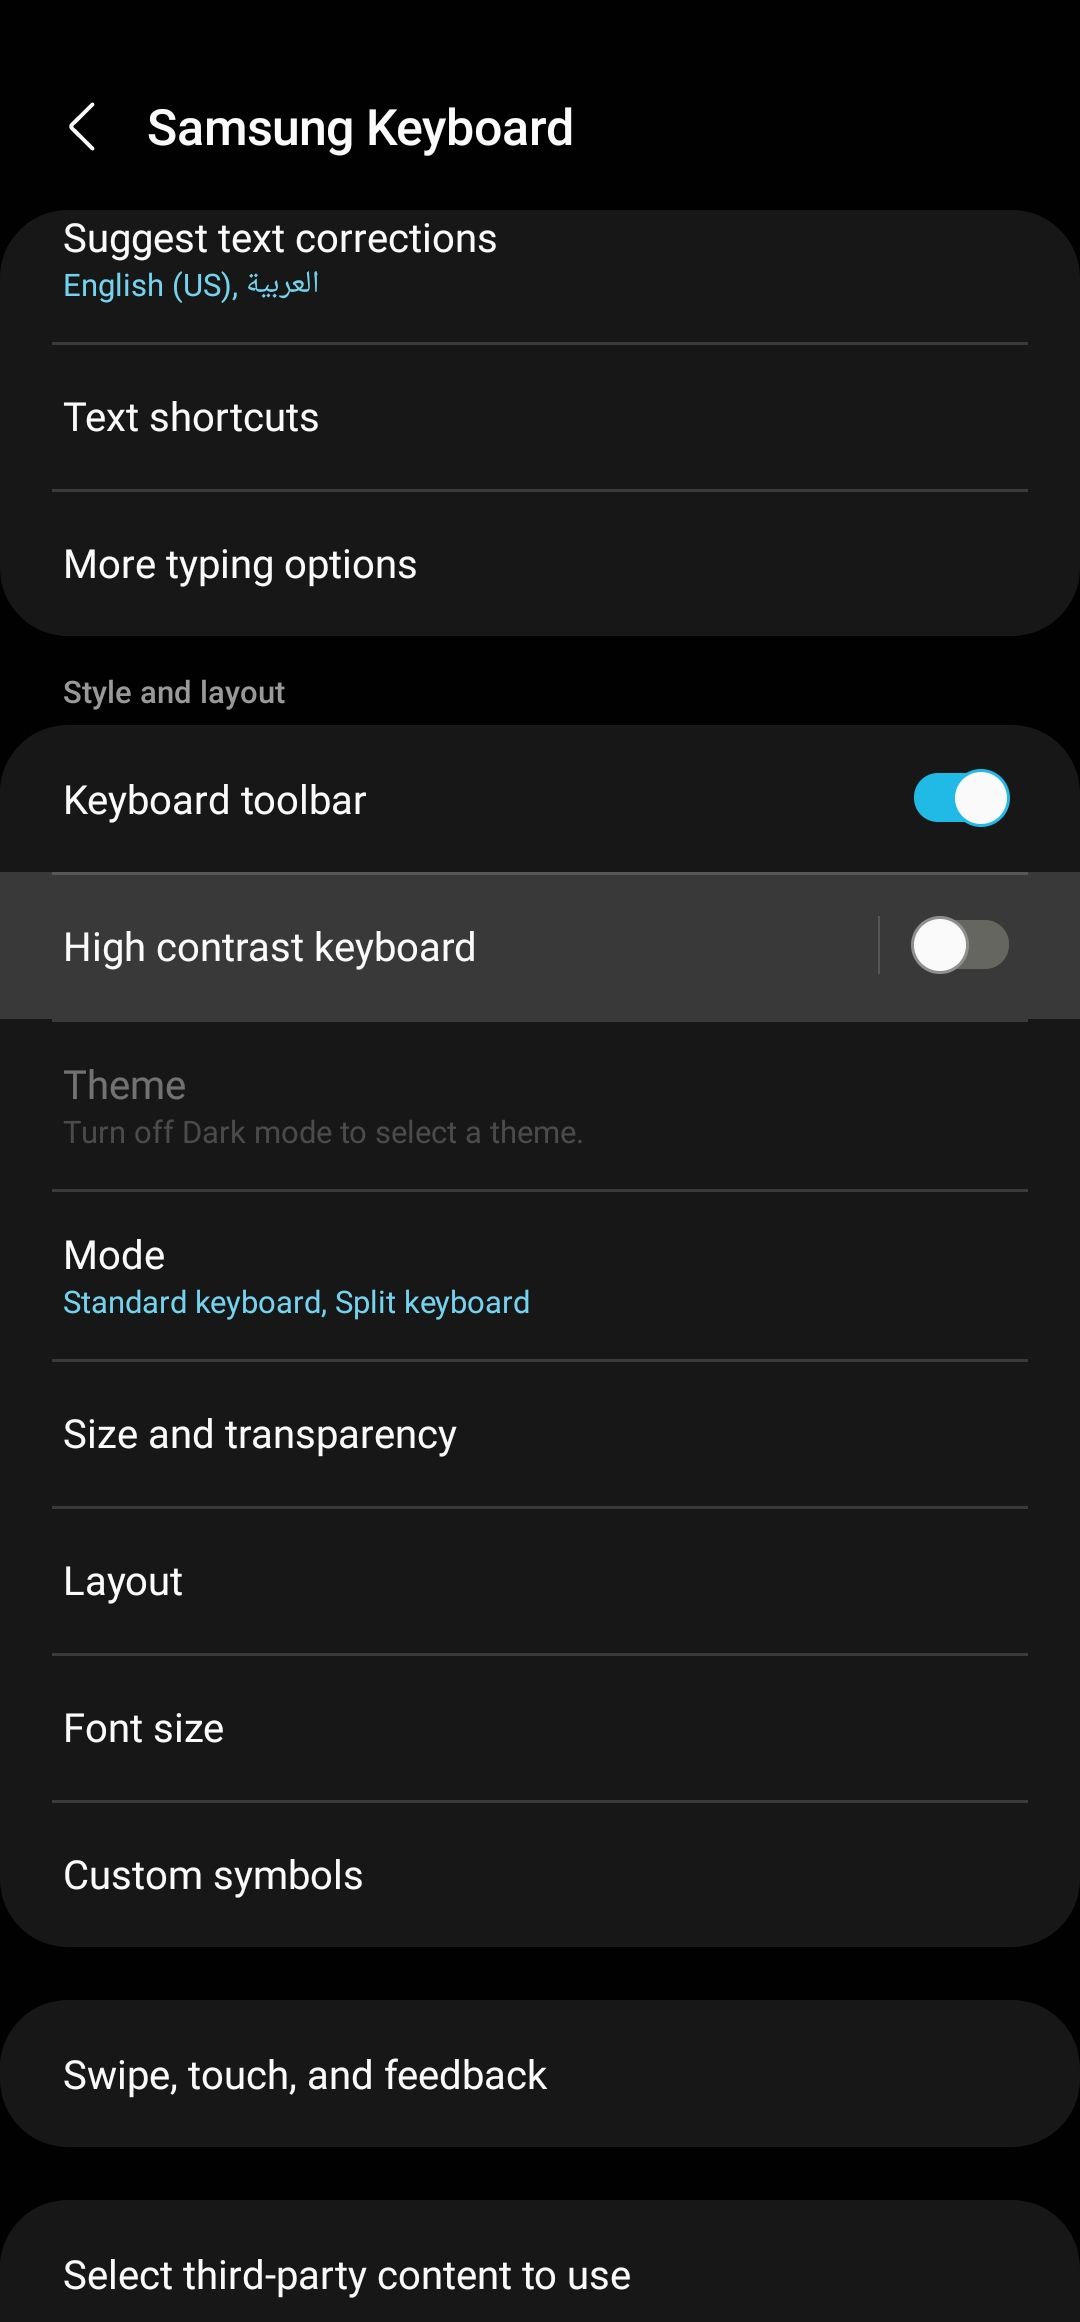 Alto contraste do teclado Samsung